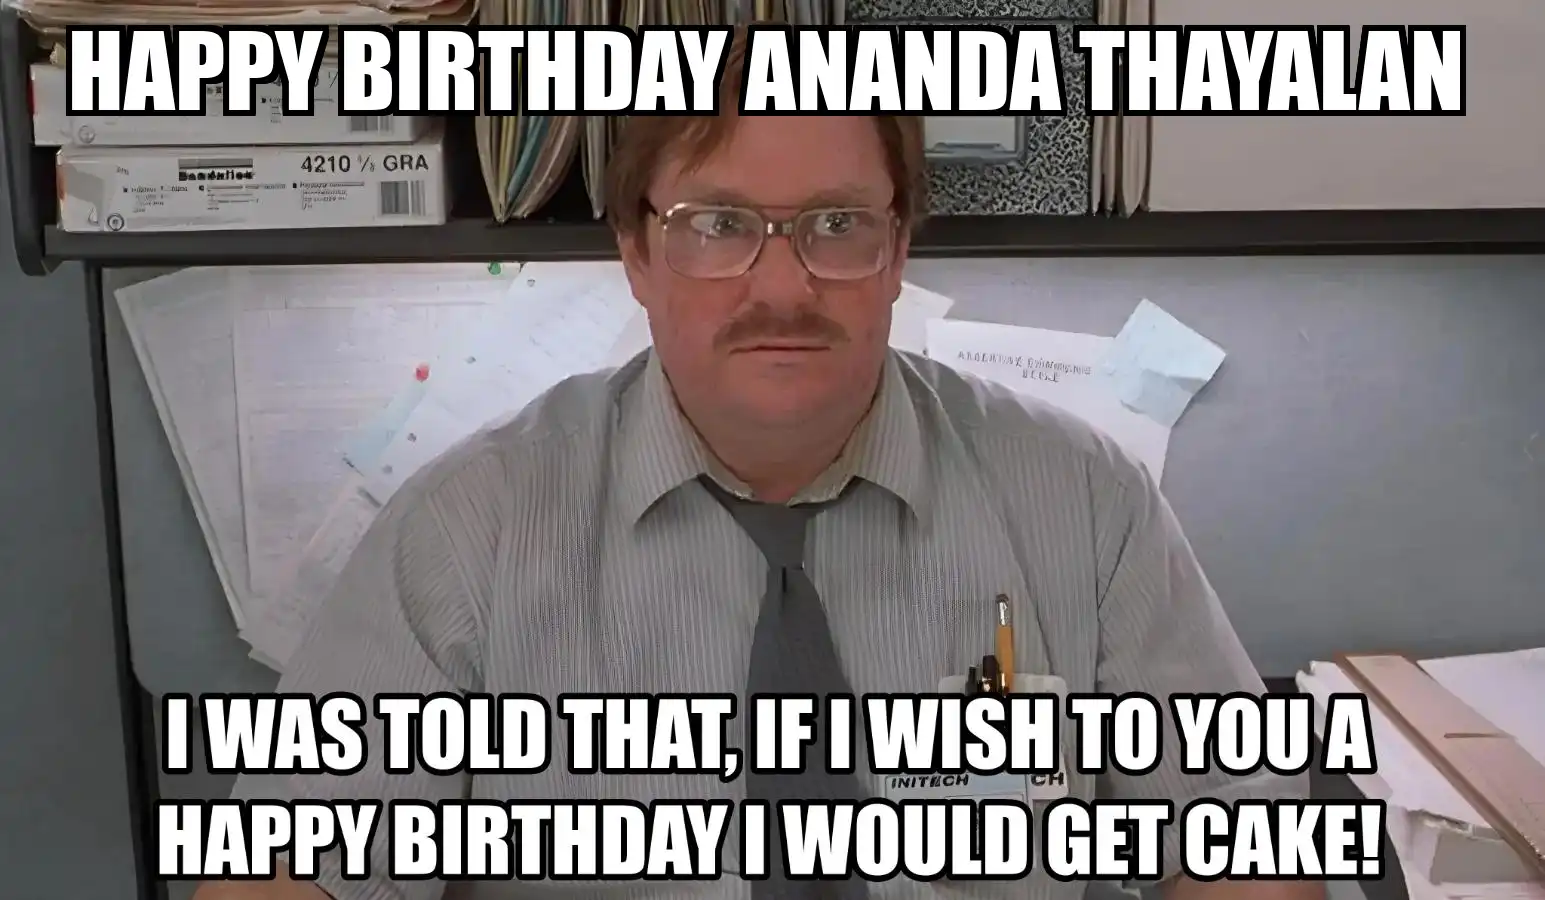 Happy Birthday Ananda thayalan I Would Get A Cake Meme